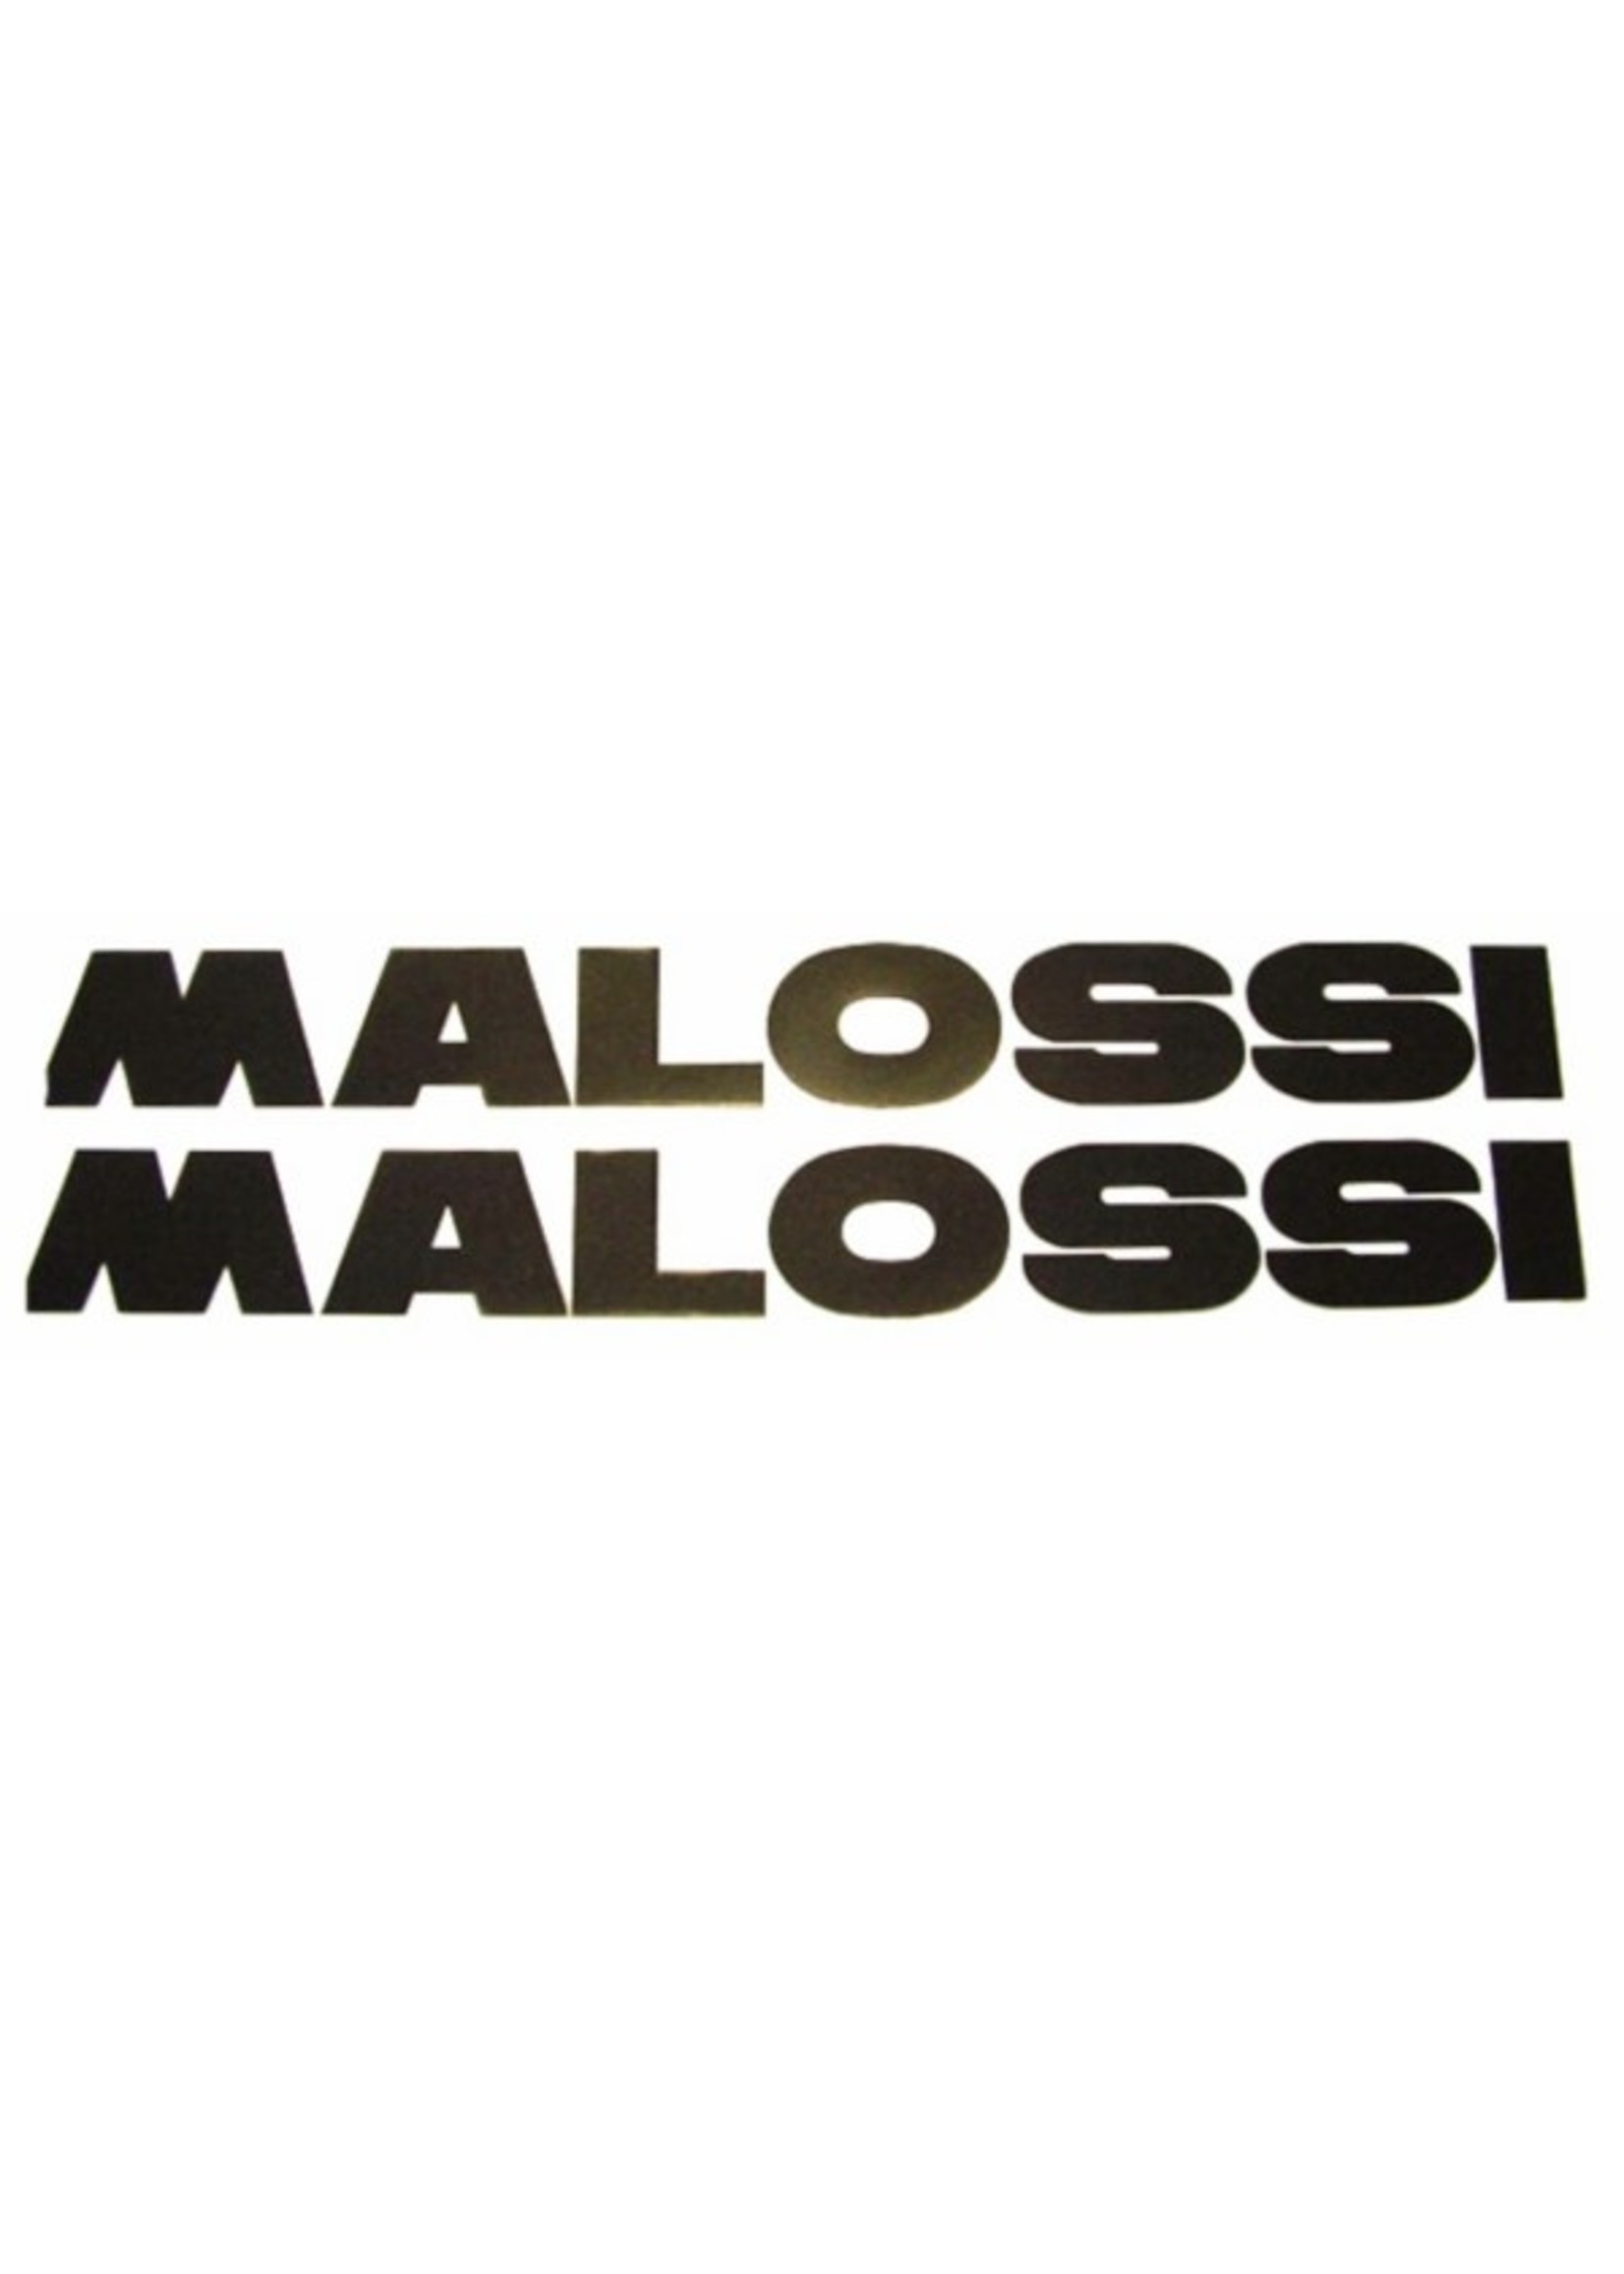 stickers sticker univ woord [malossi] 30cm zwart falko 980632bla 2-delig